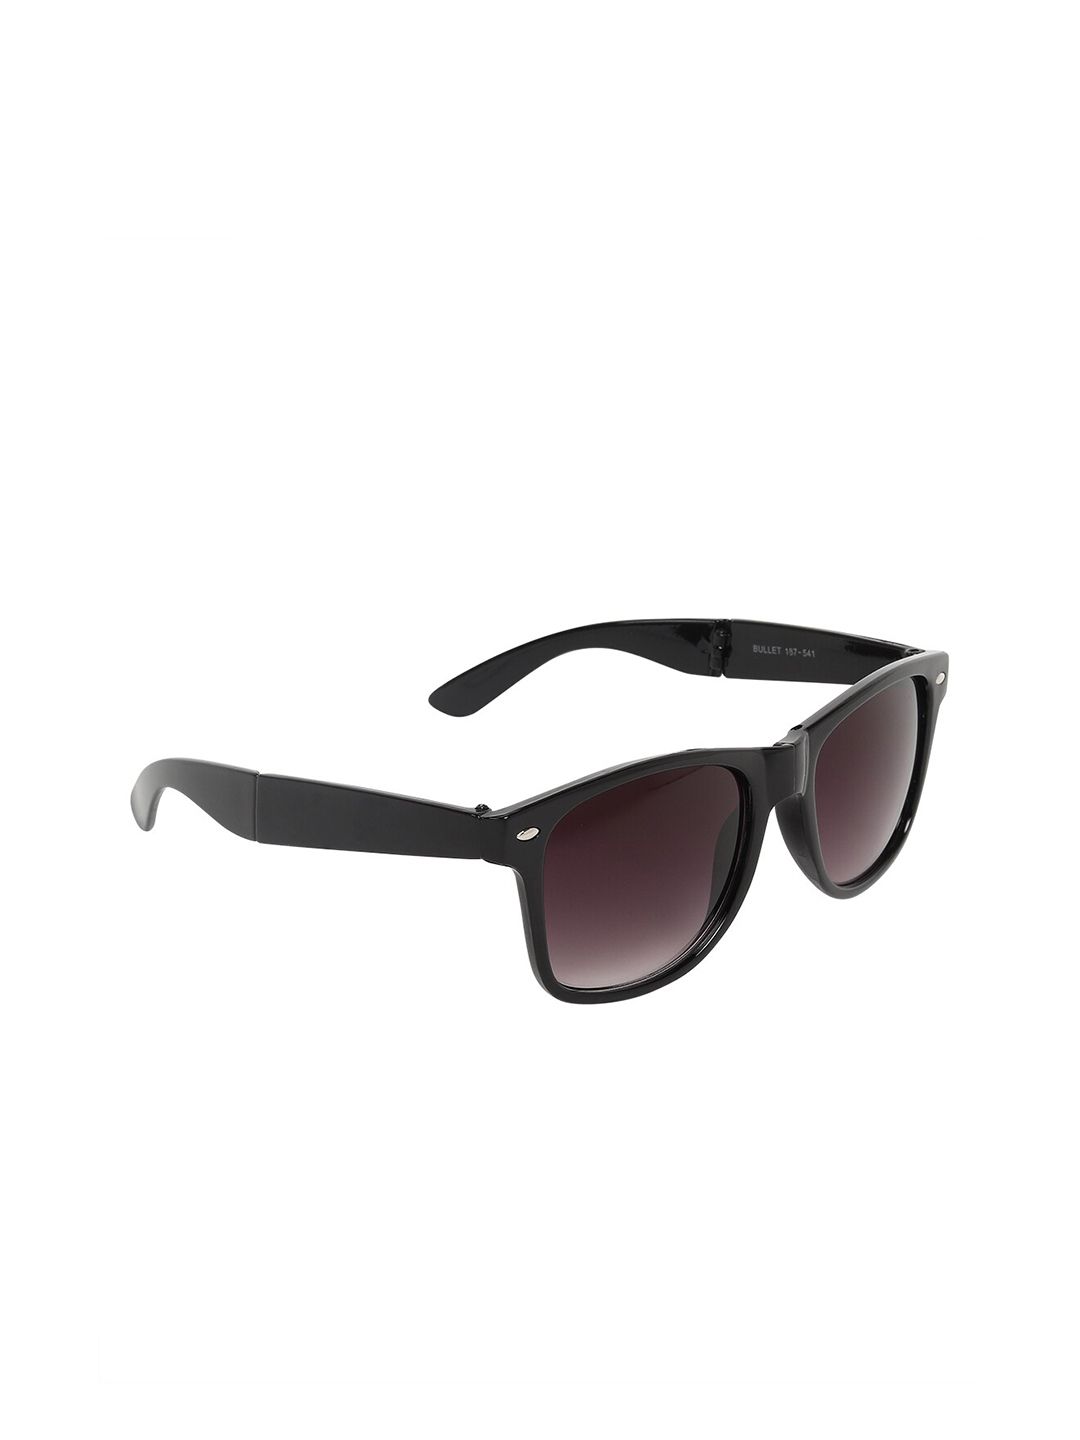 CRIBA Unisex Grey Lens & Black Wayfarer Sunglasses with UV Protected Lens Price in India